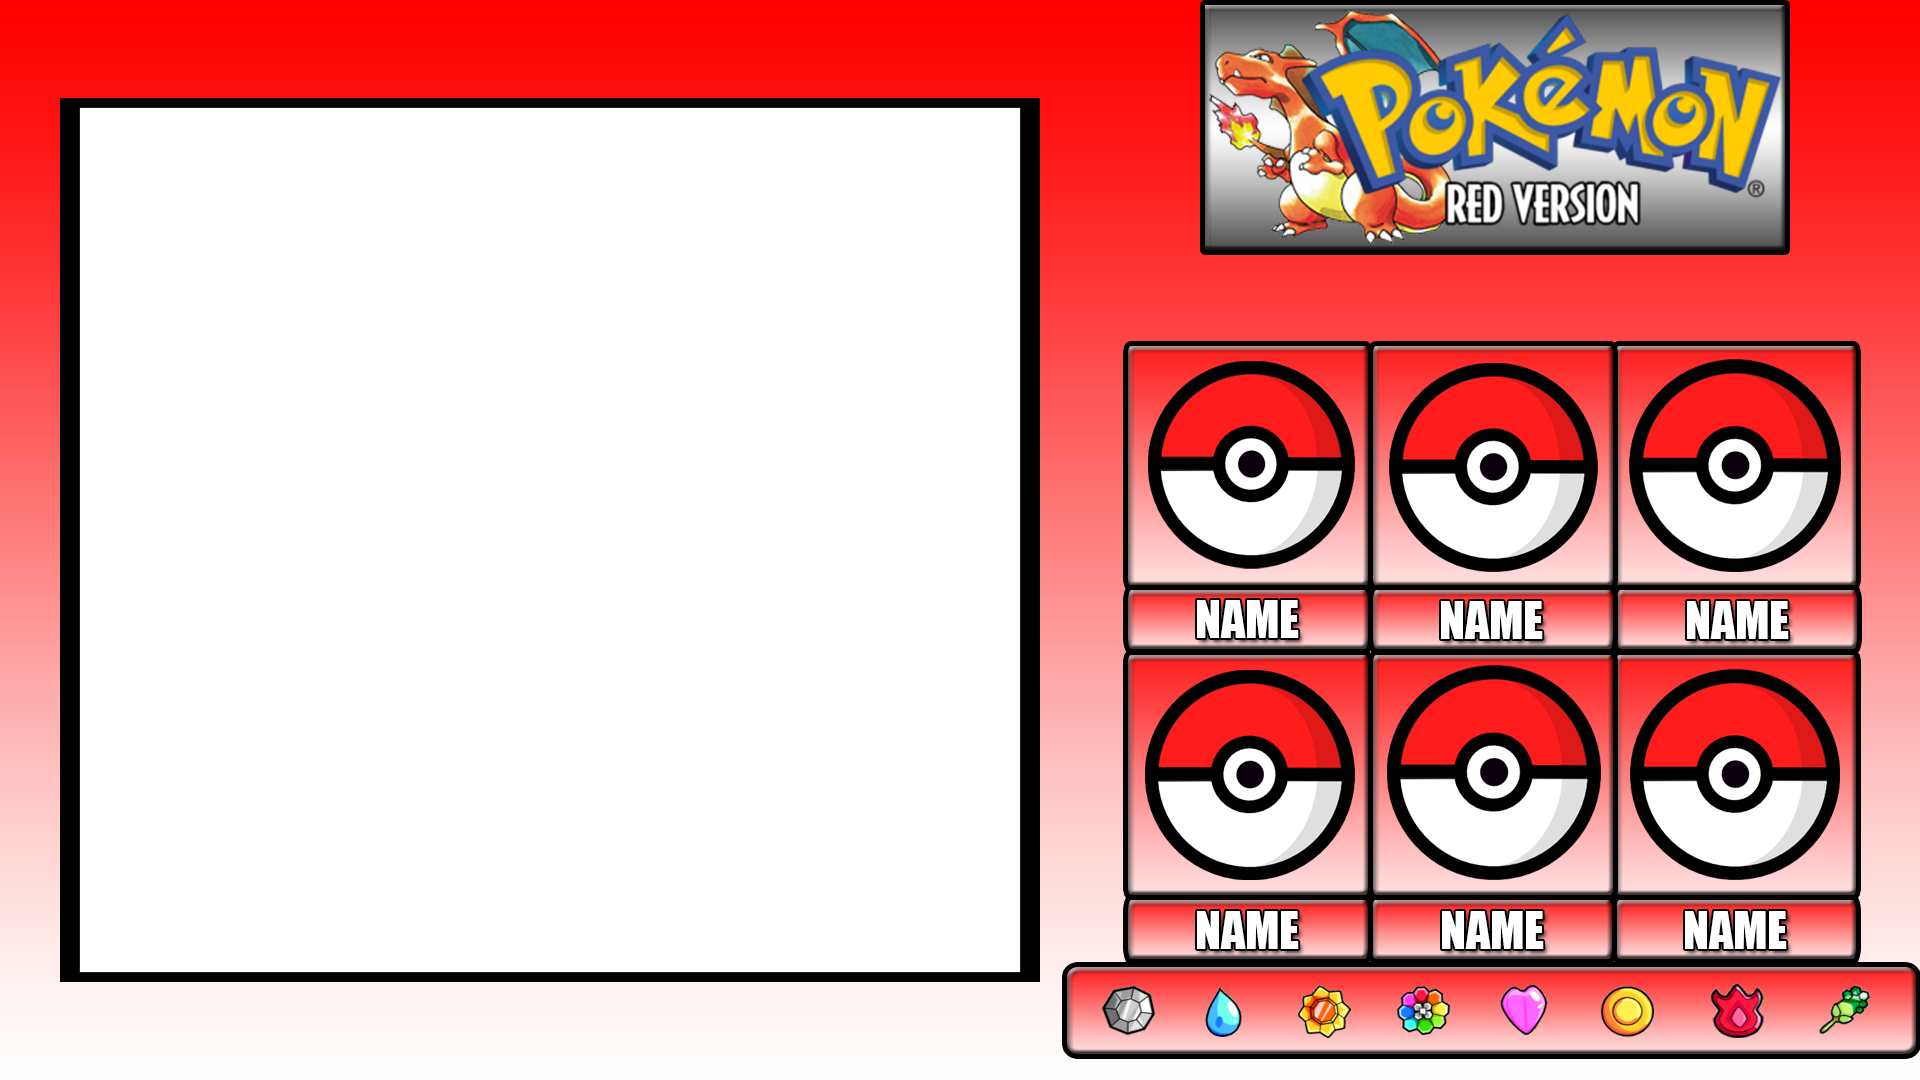 Pokemon Fire Red ROMs - Download by fontsluck on DeviantArt